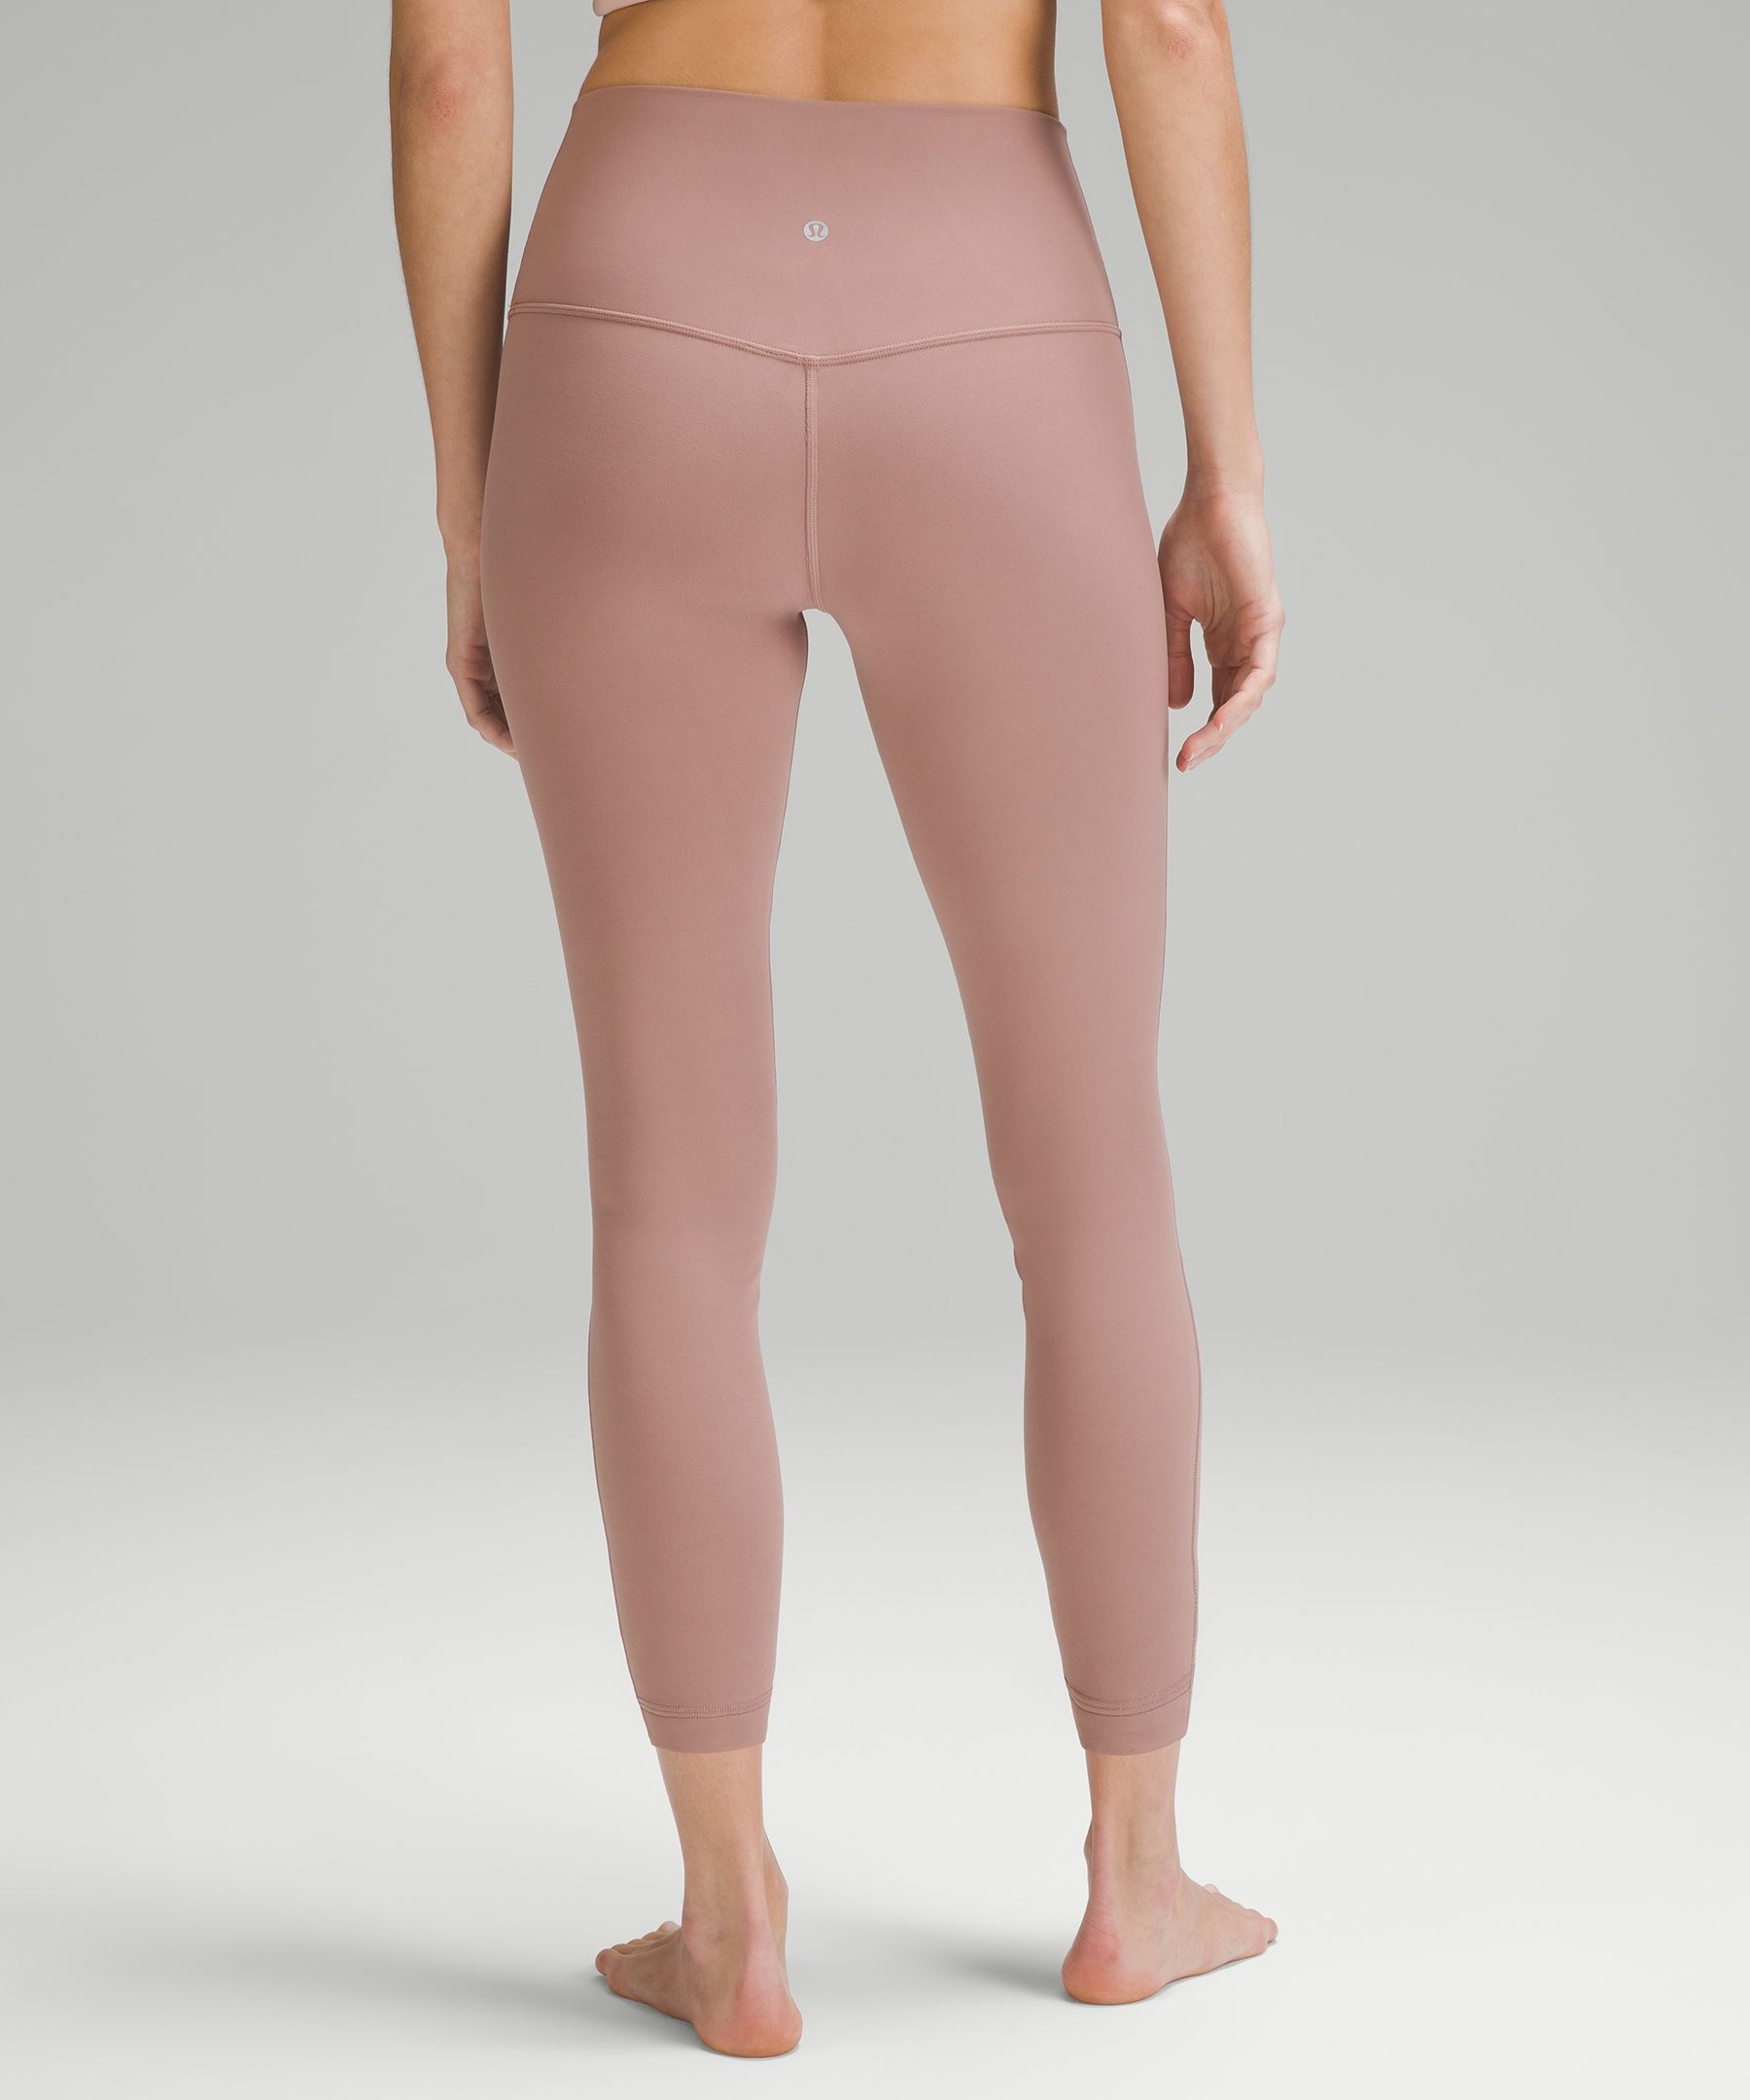 Lululemon Align™ High-Rise Pant 25 Women's Pants, 52% OFF